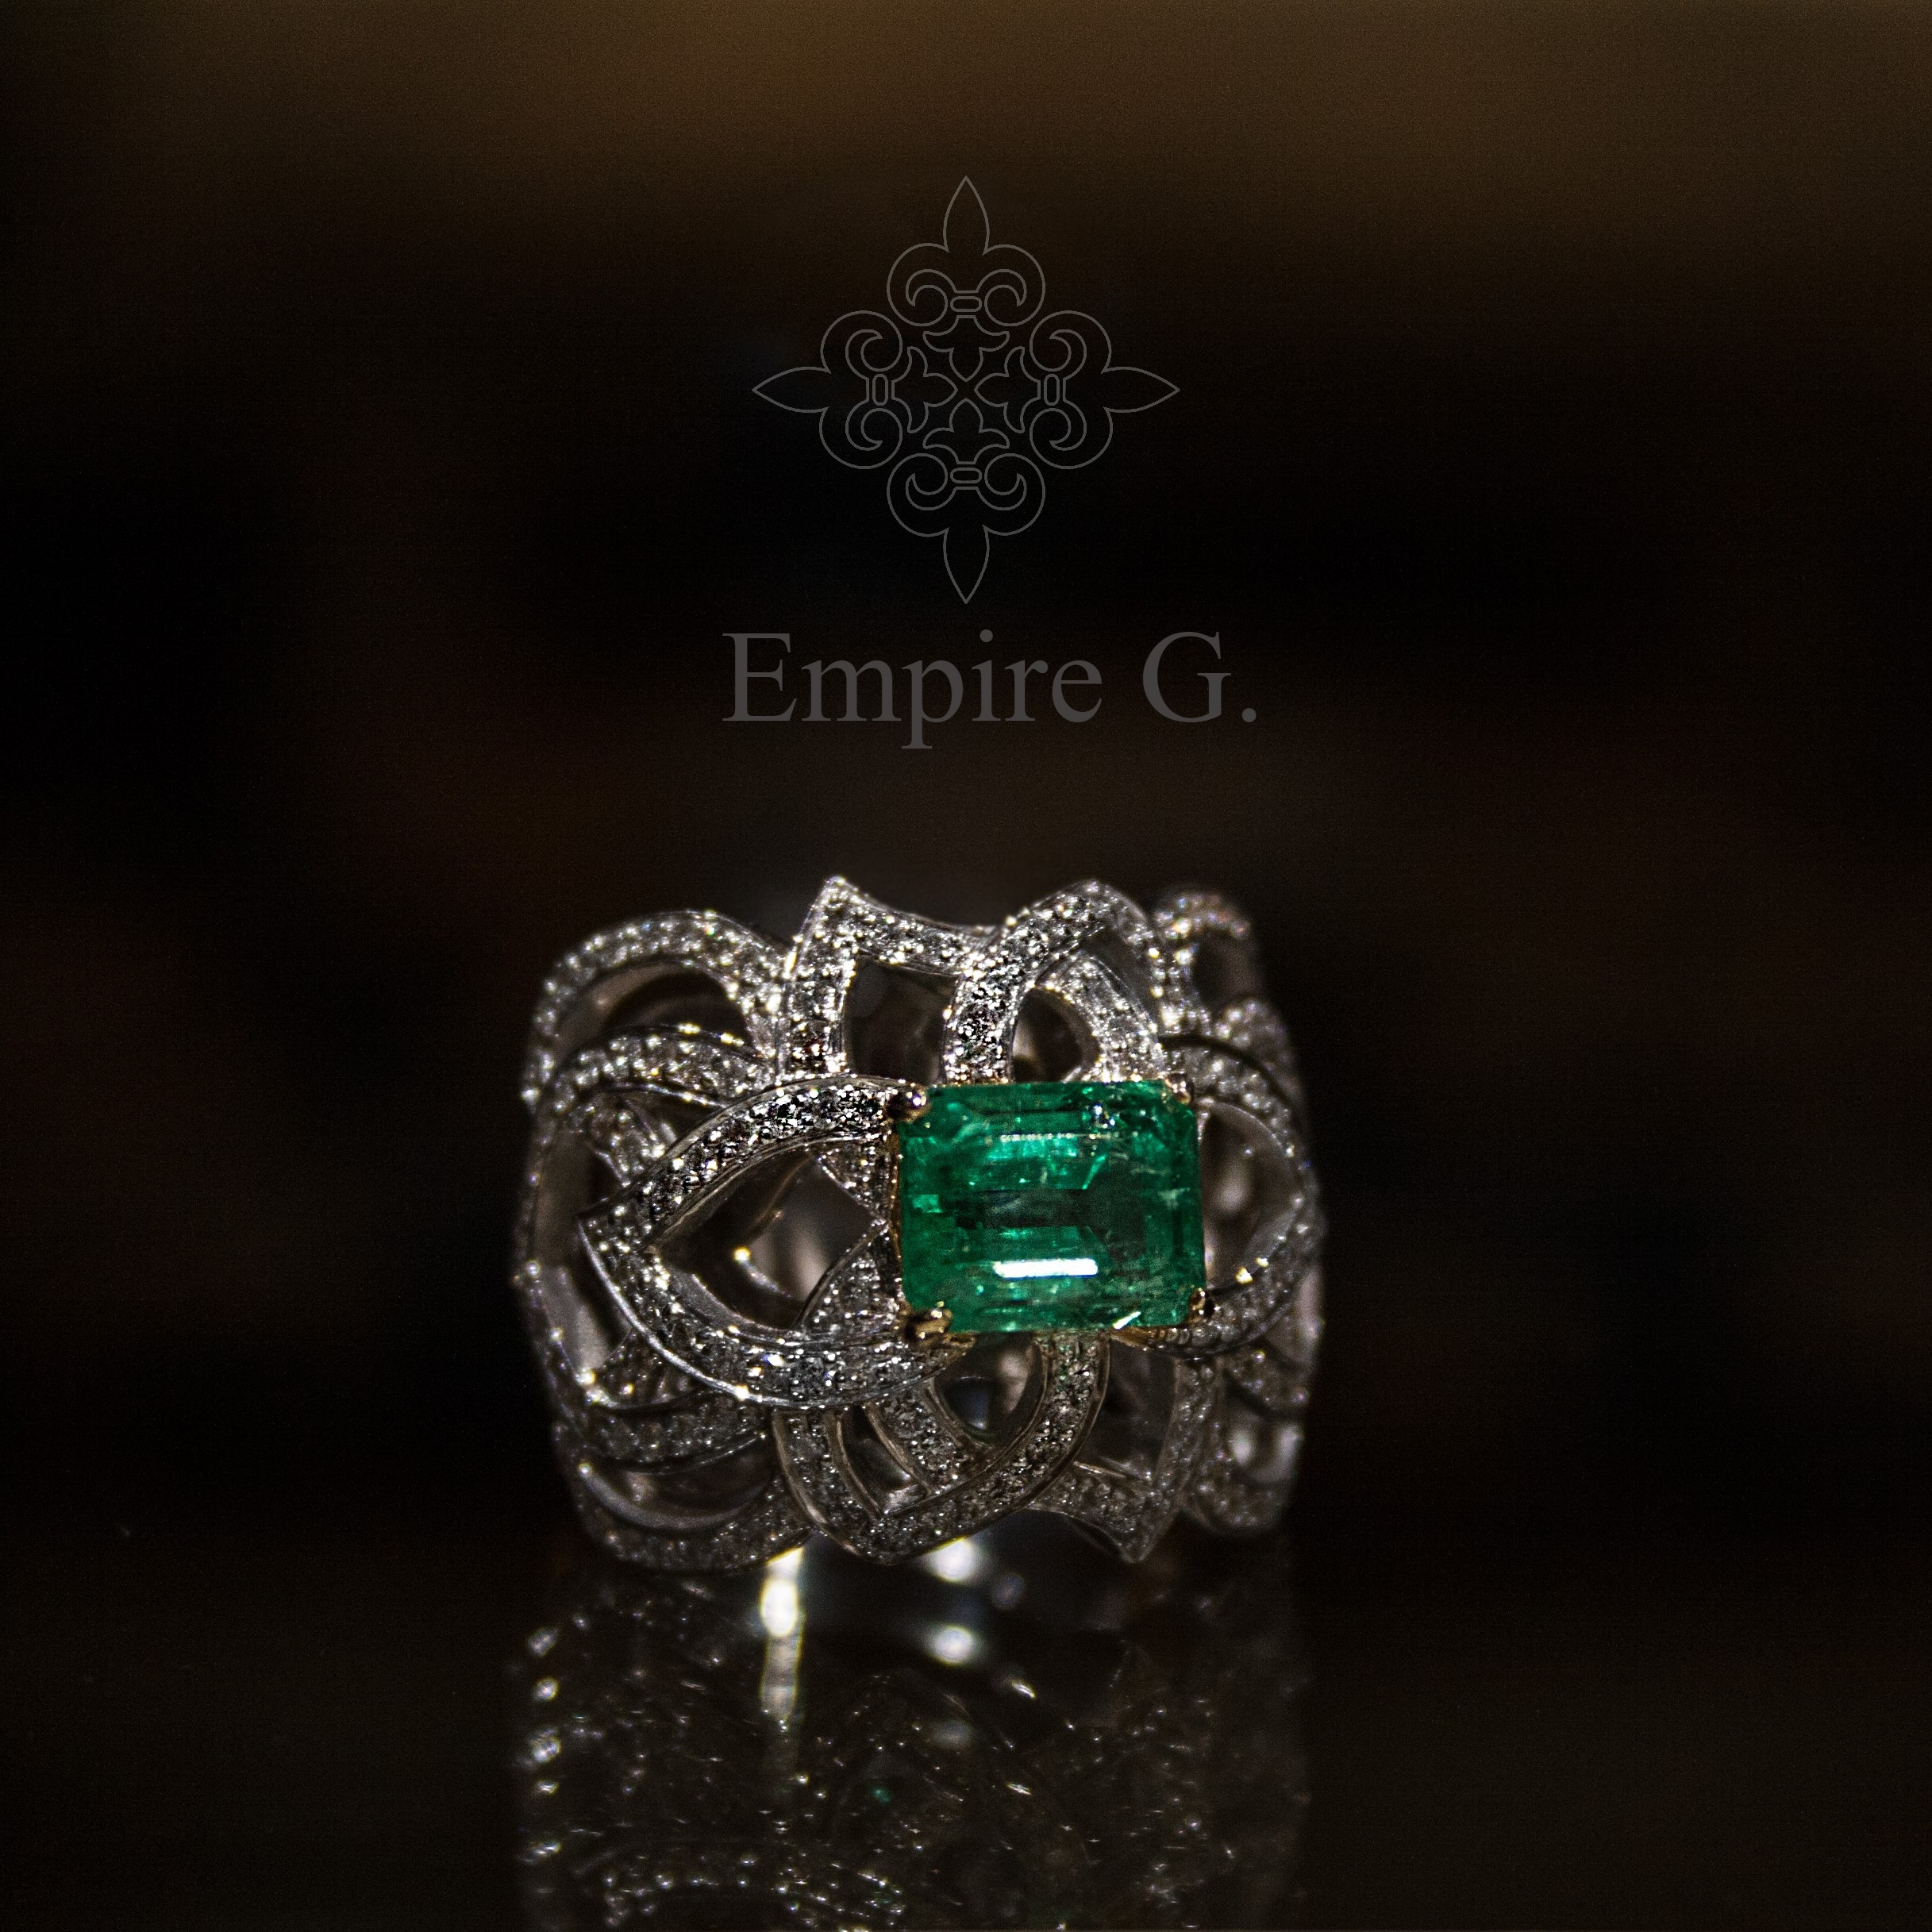 Кольцо "Низам", Empire G. Royal jewelry house